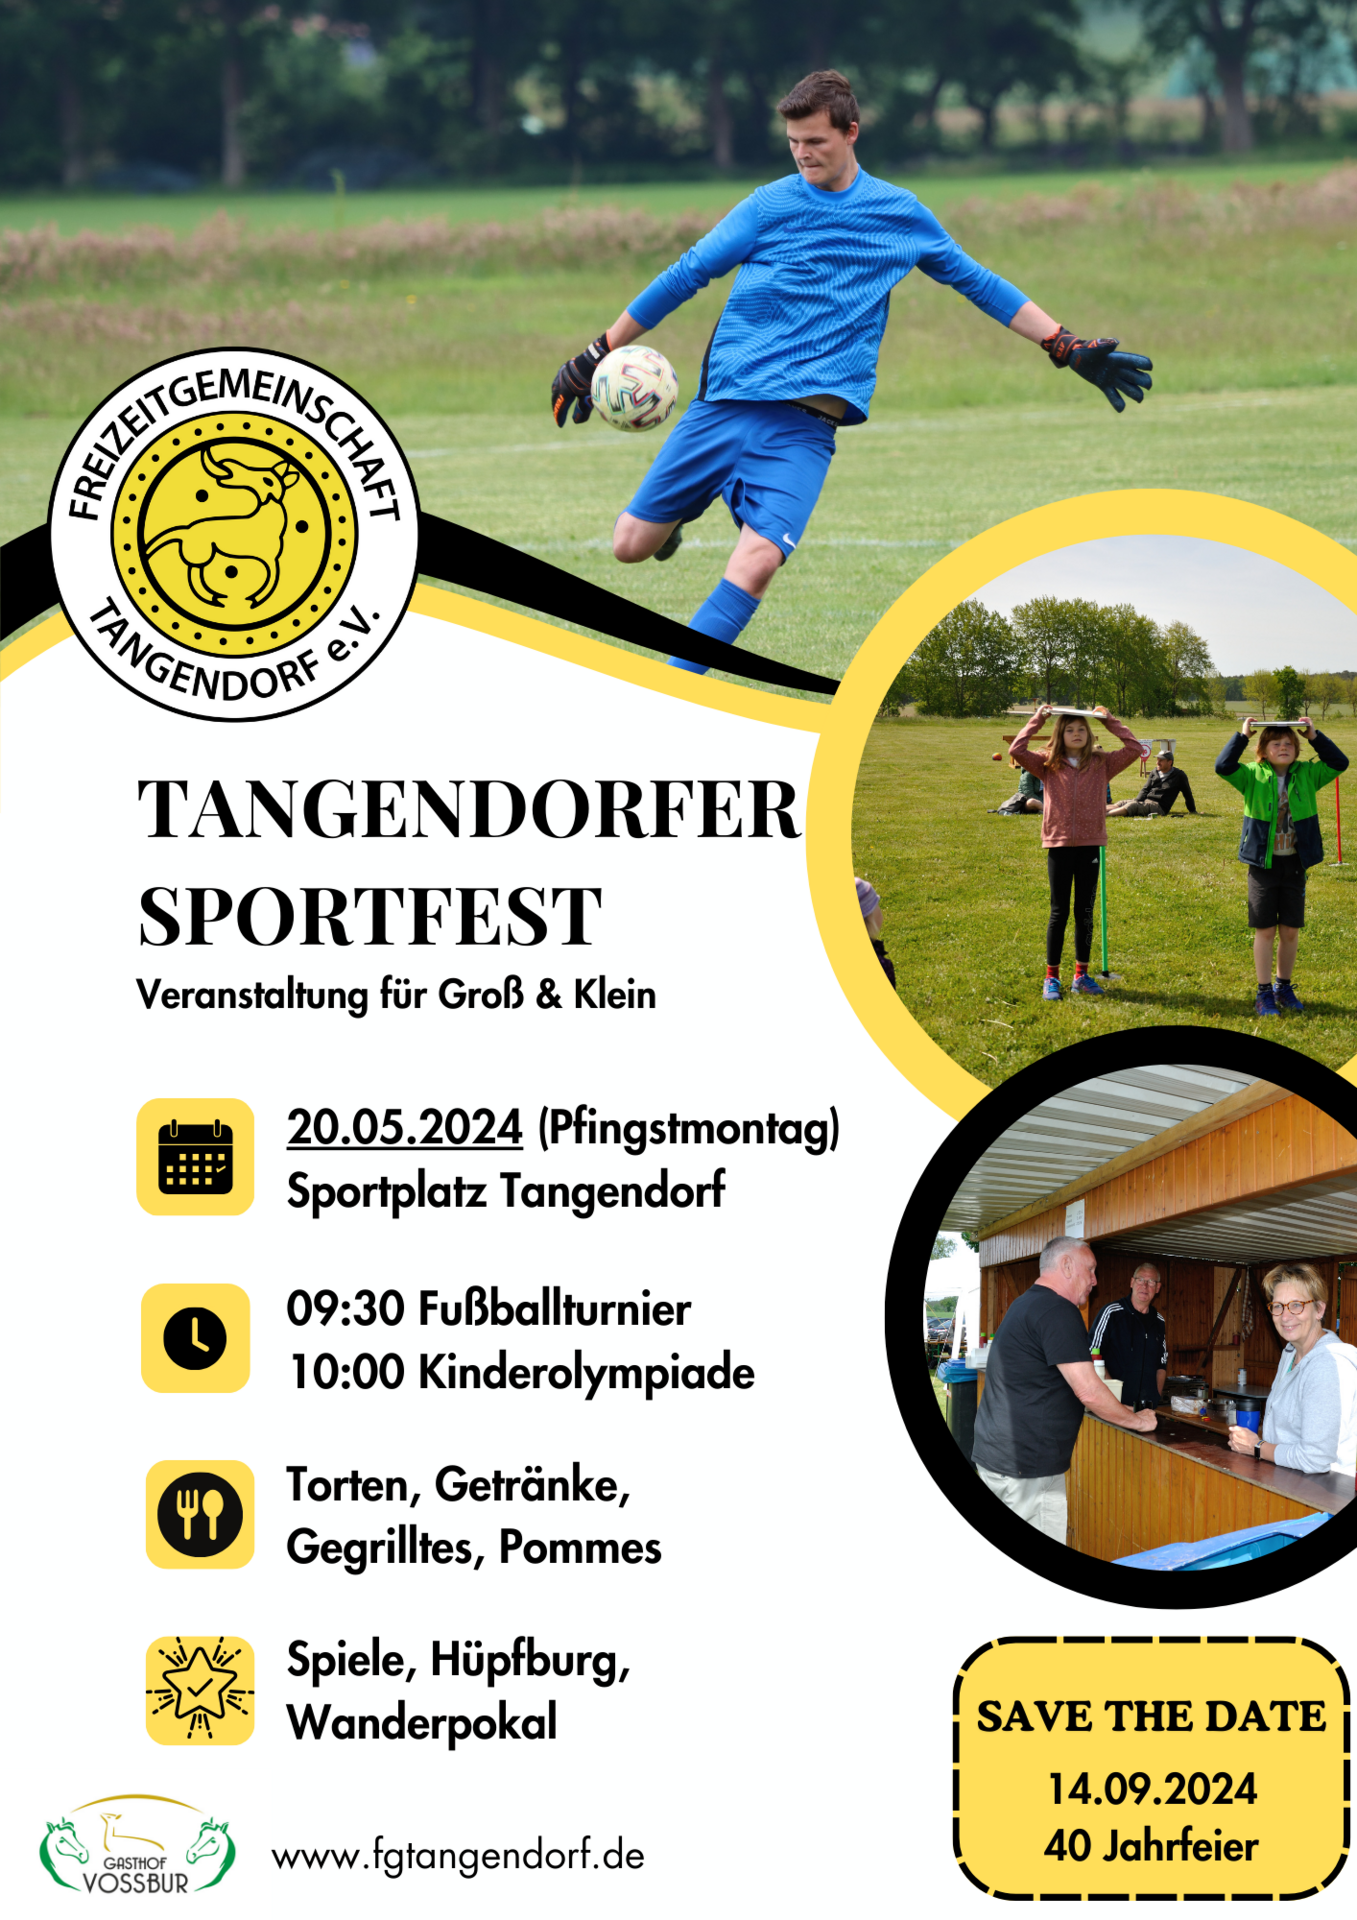 Tangendorfer Sportfest